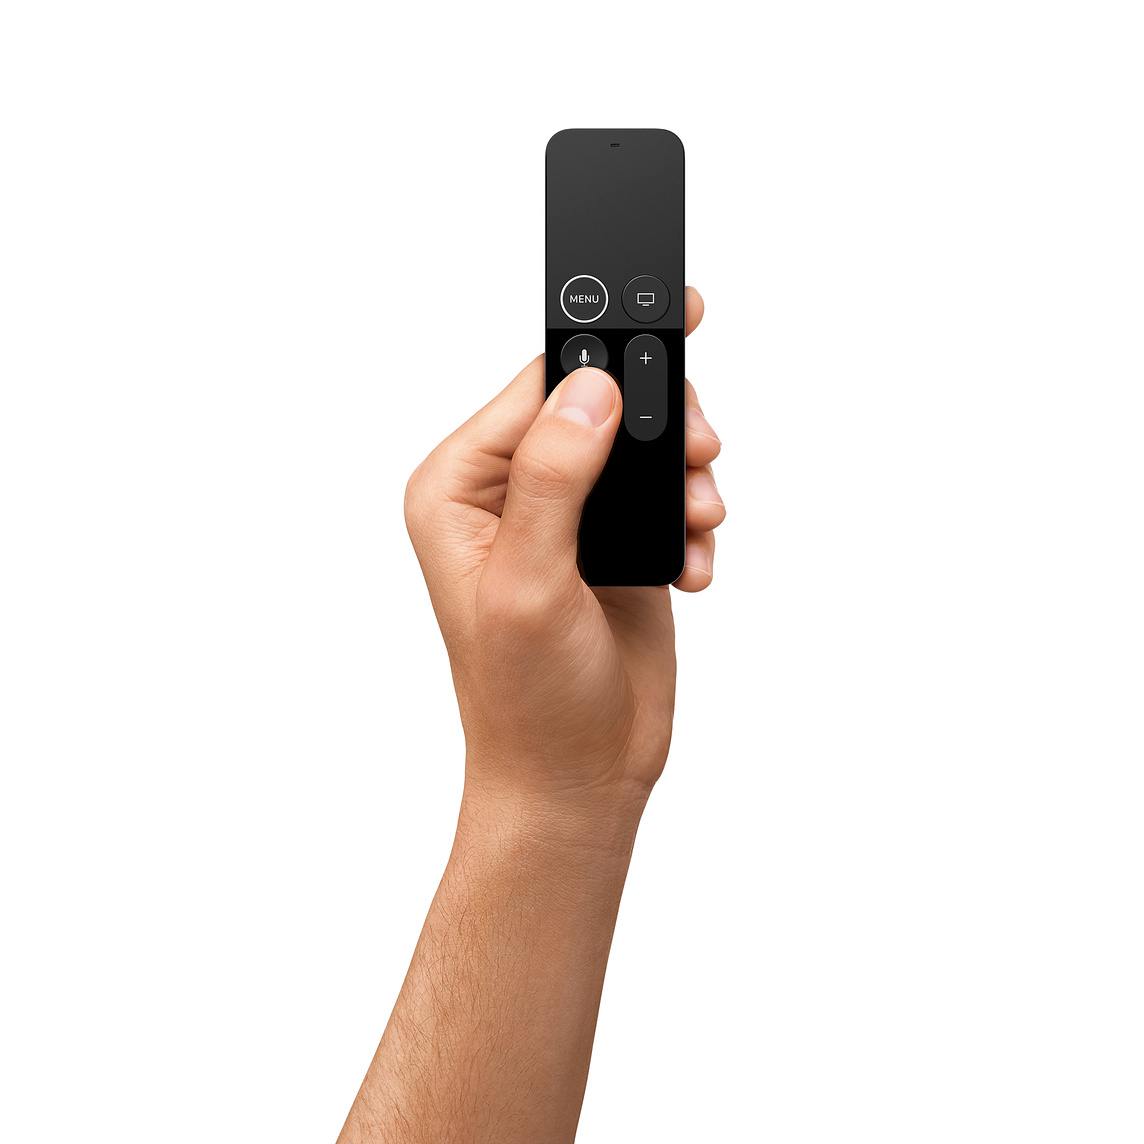 Apple TV Remote (чёрный)